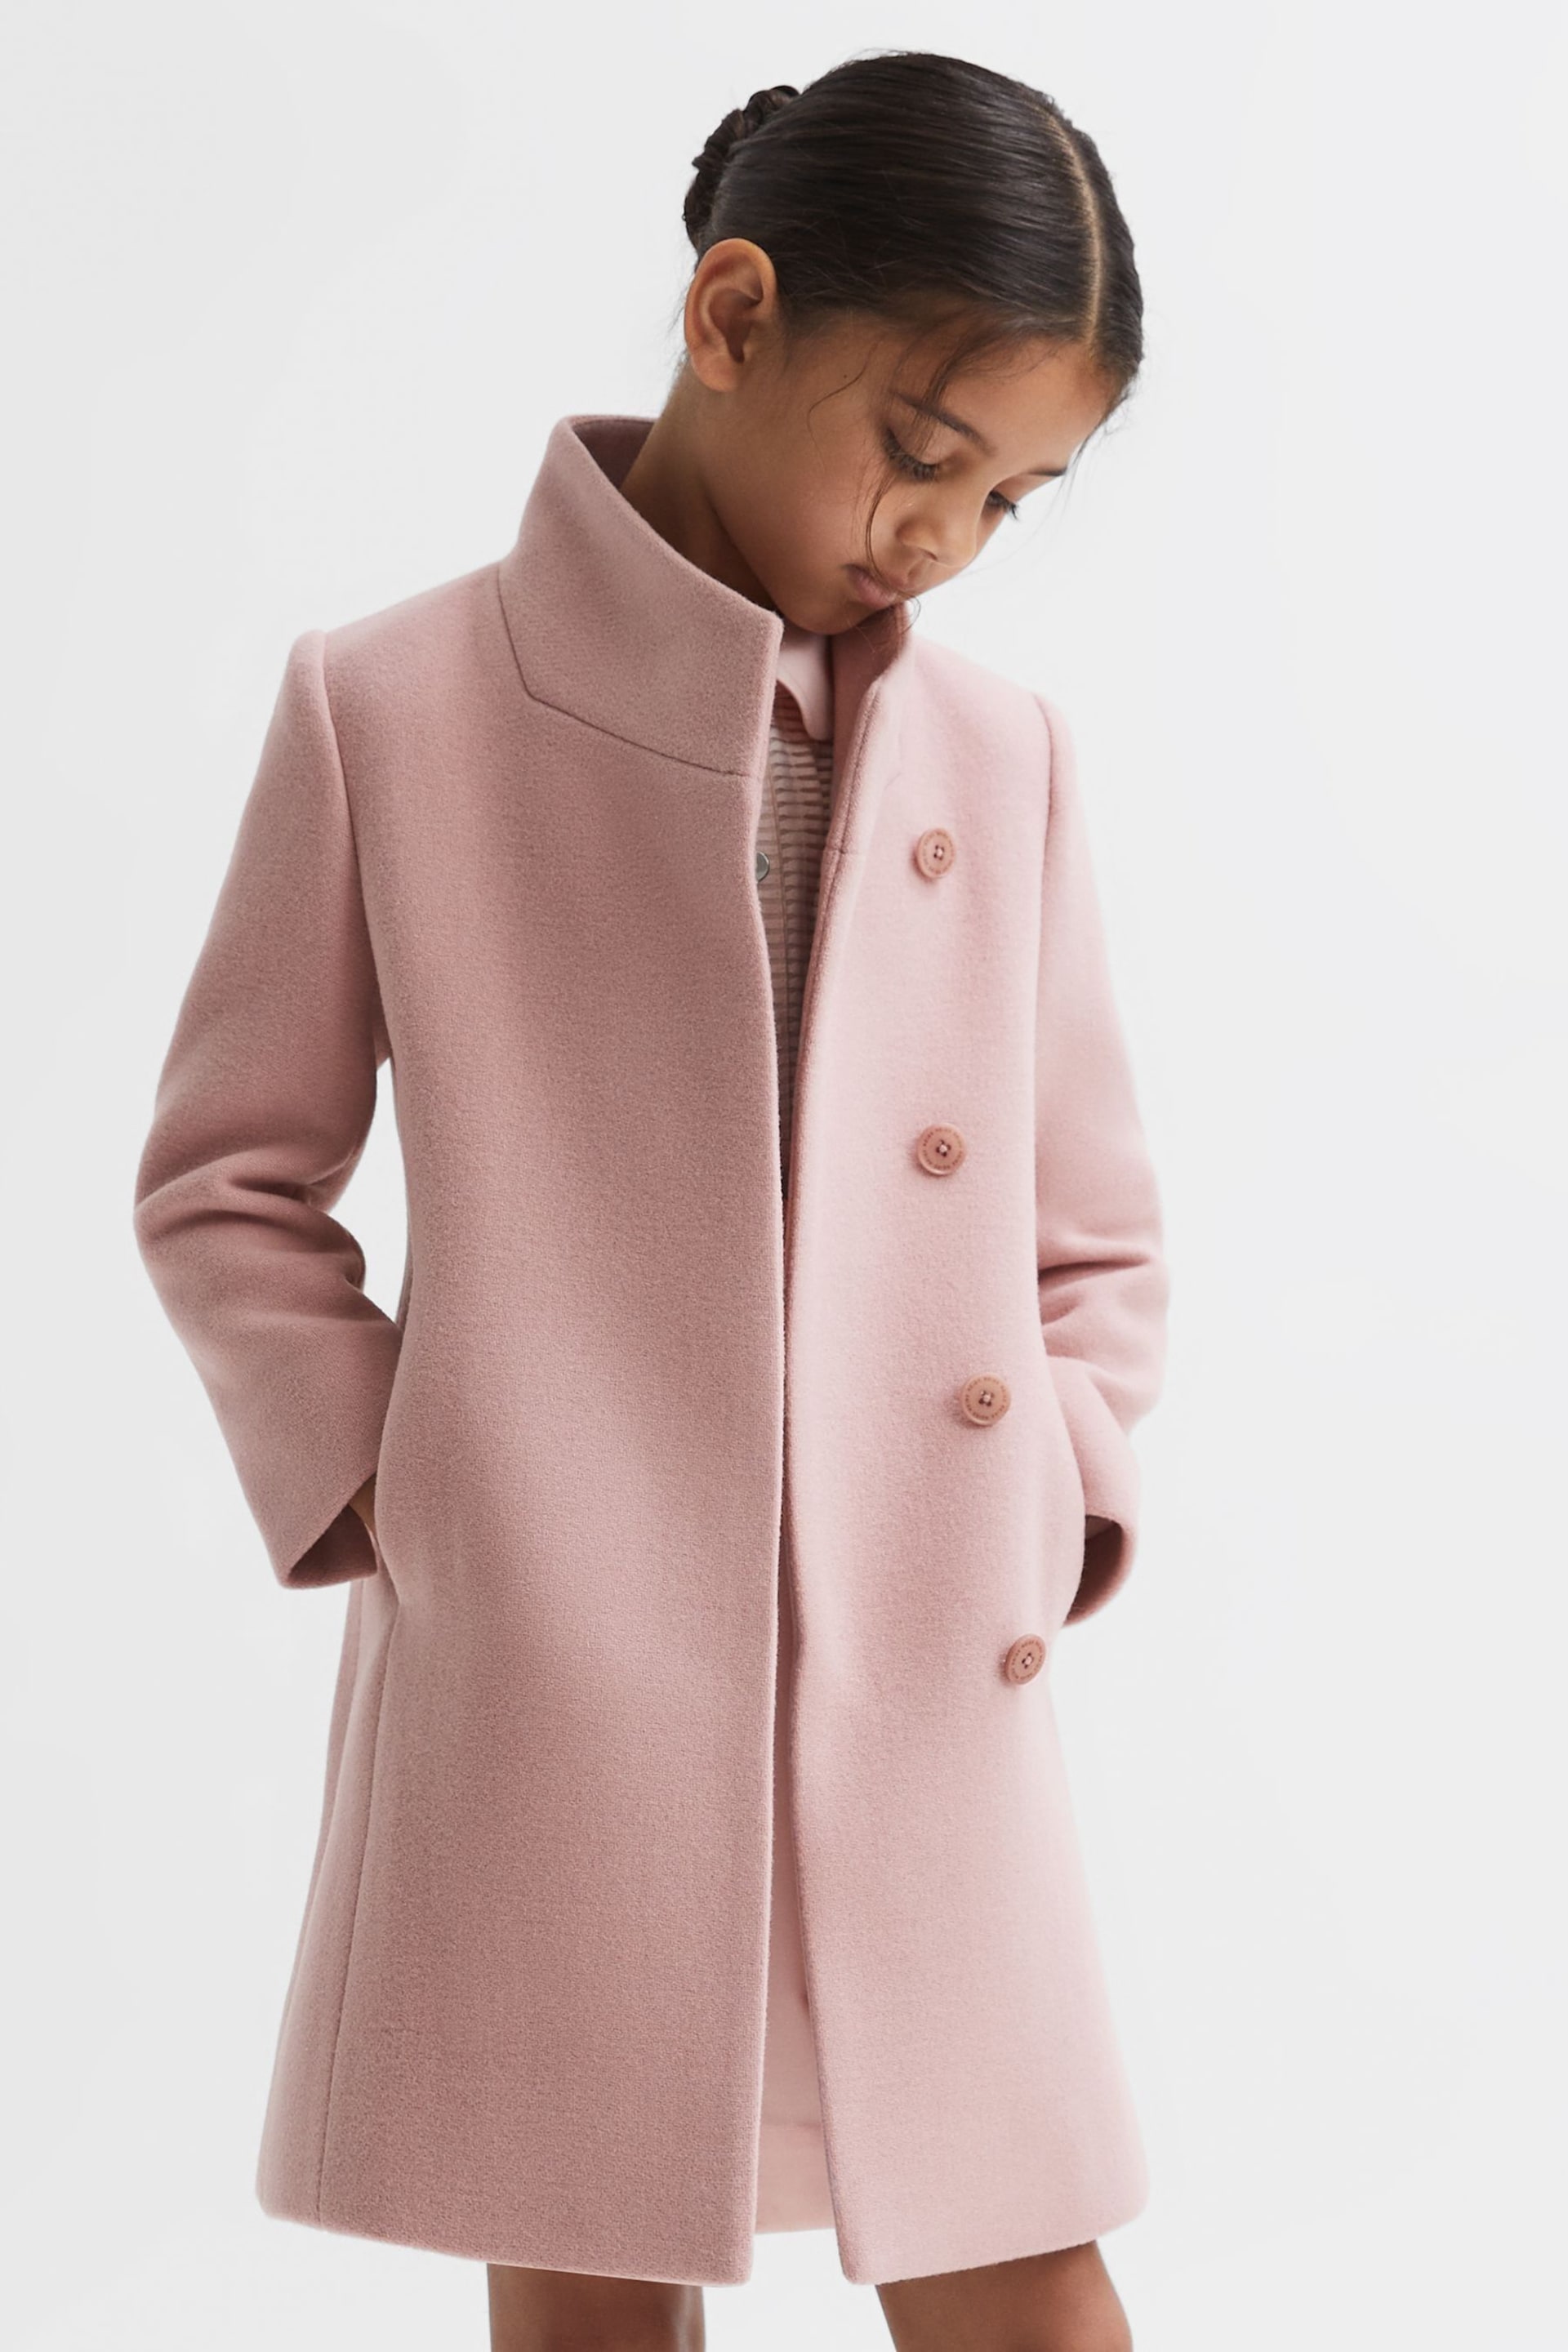 Reiss Pink Kia Junior Wool Blend Funnel Neck Coat - Image 1 of 6